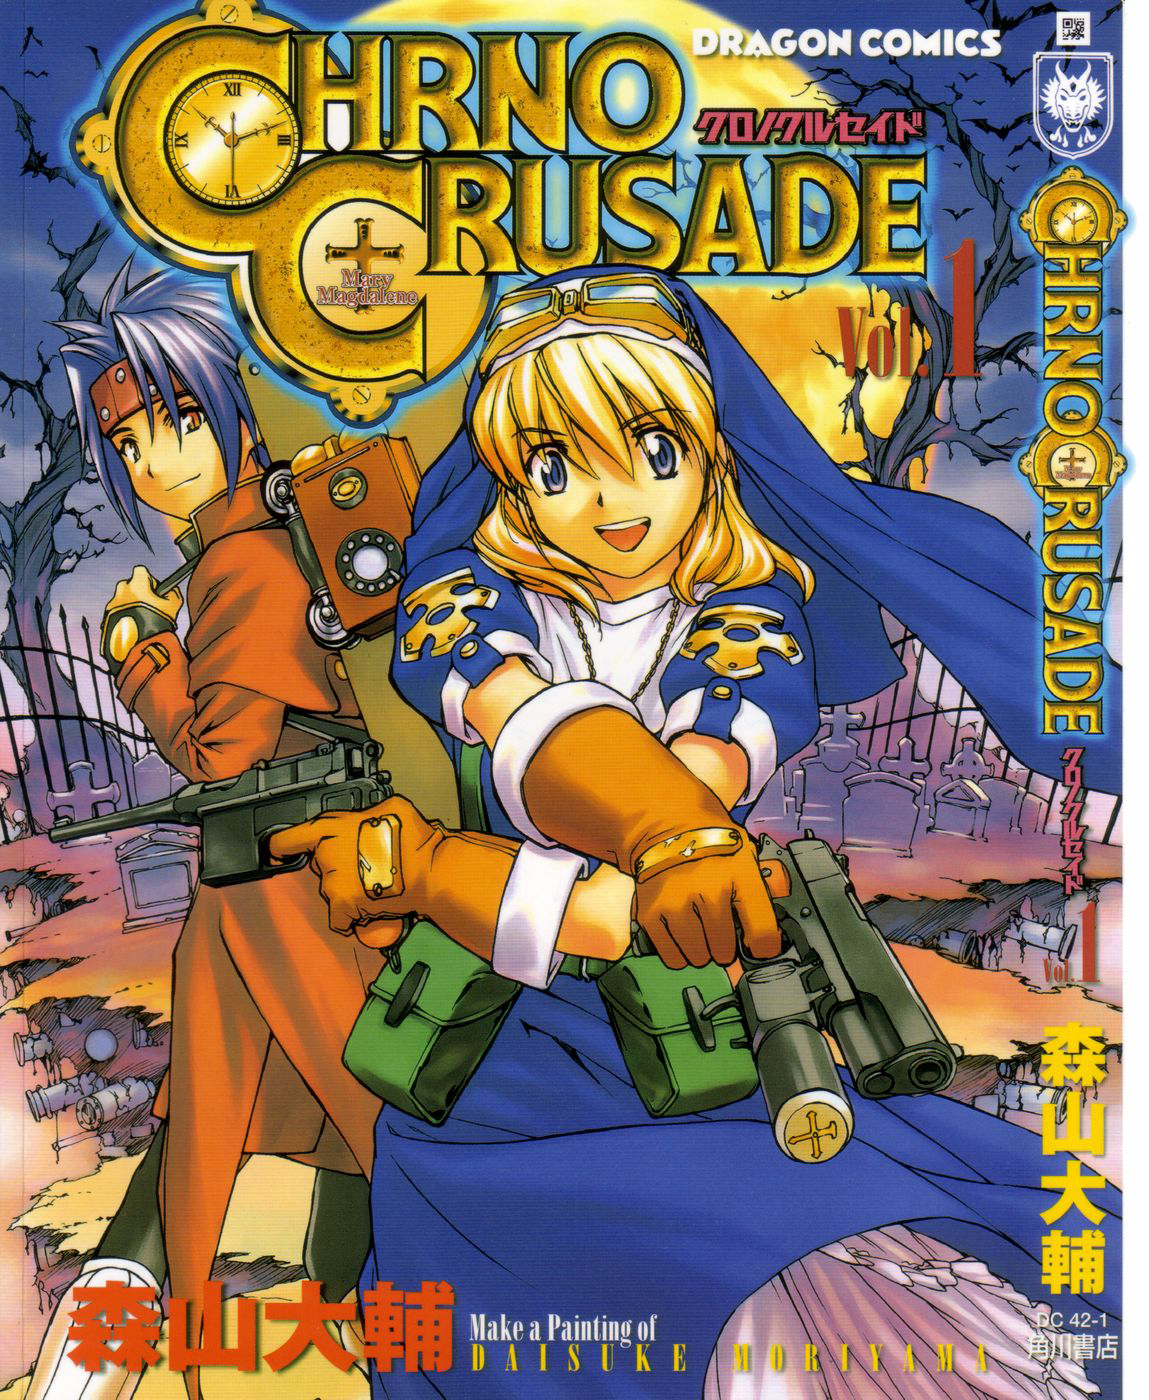 [Manga] Chrono Crusade (Đọc online tại SSF) CHRNO-CRUSADE-01-000-a